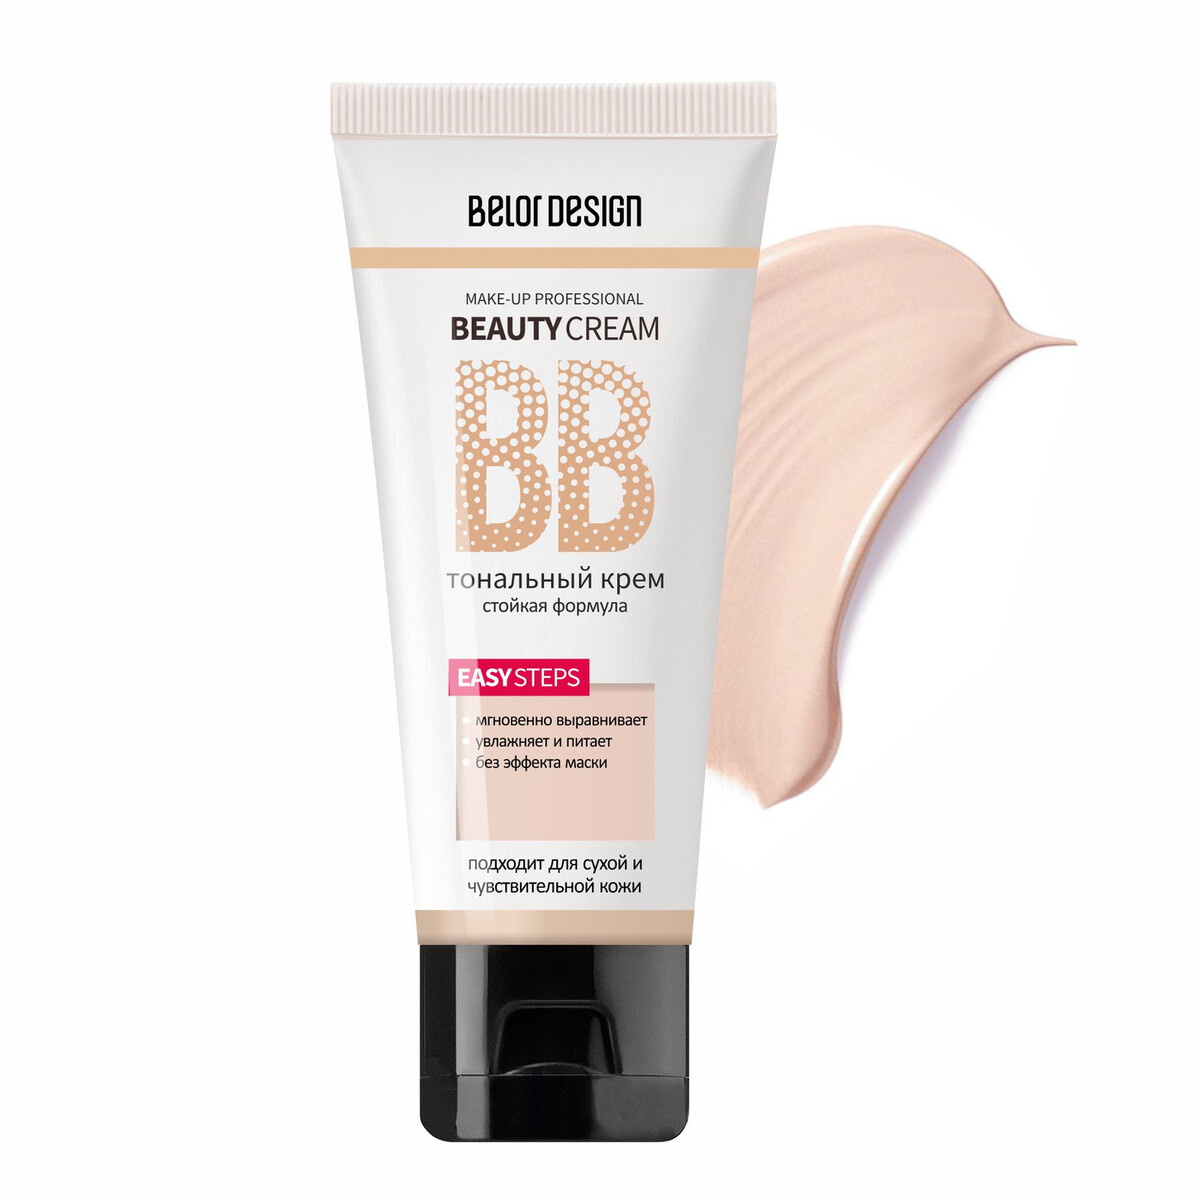   bb beauty cream  101